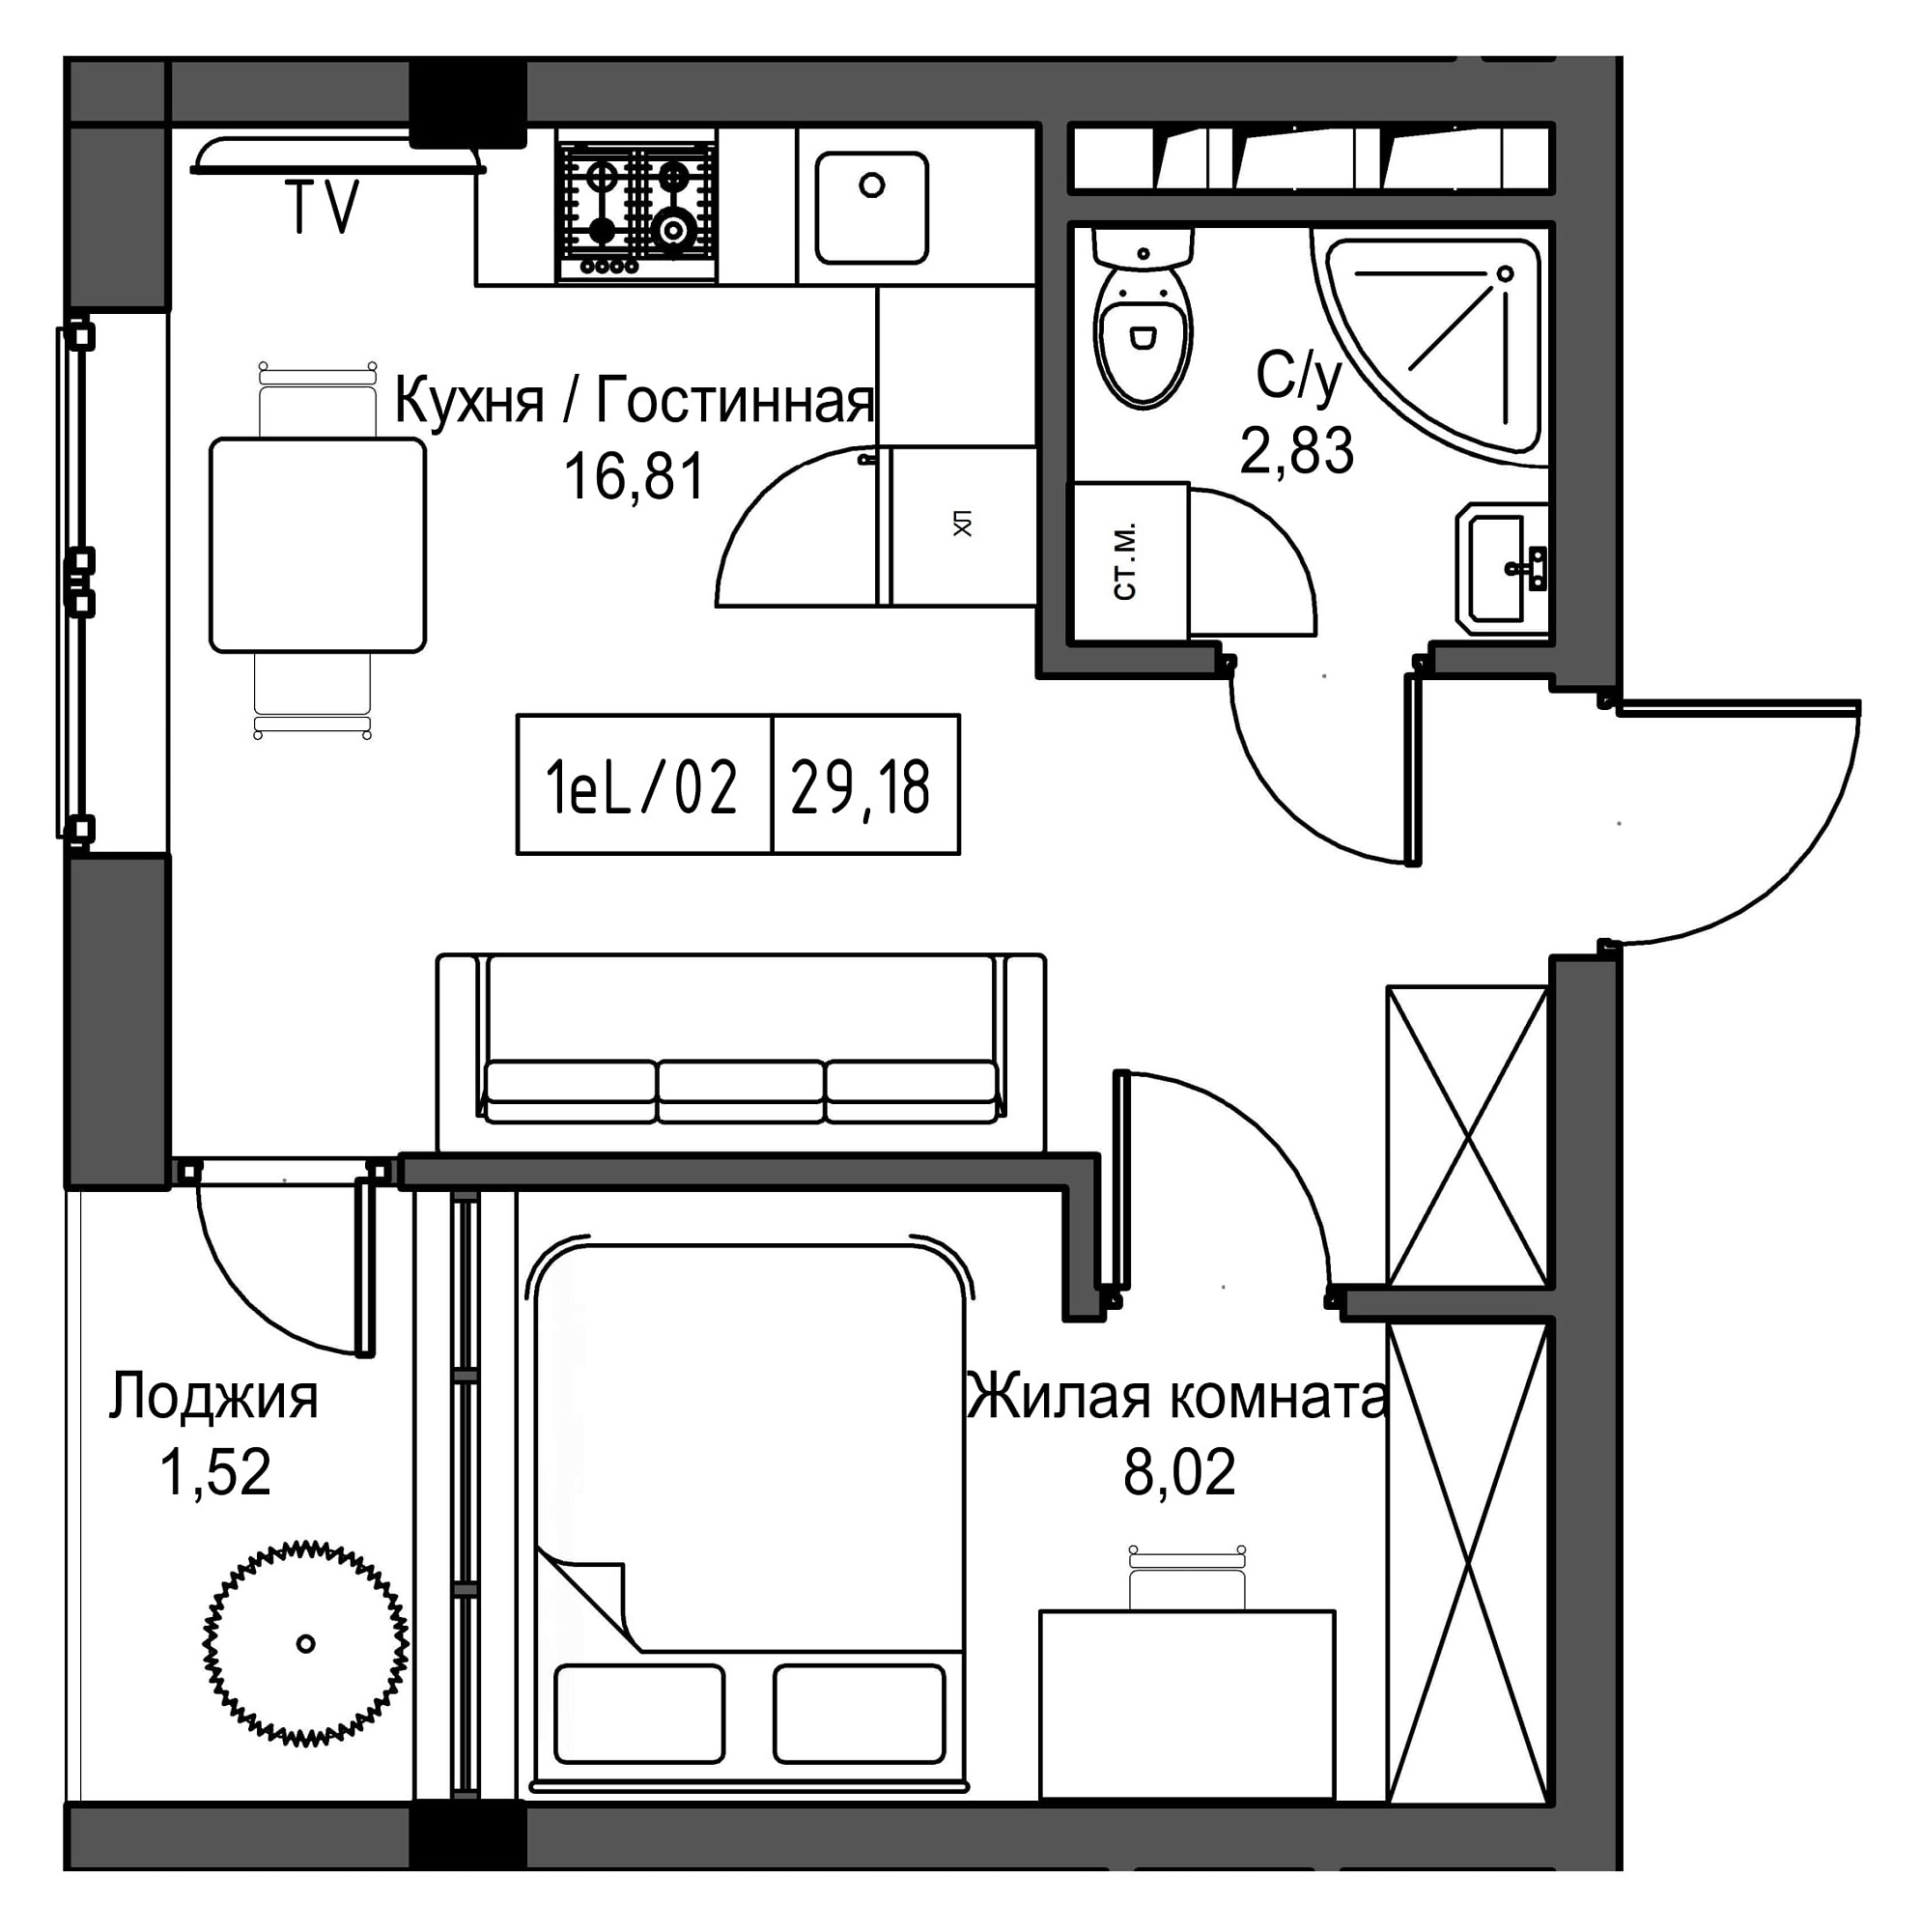 Планування 1-к квартира площею 29.18м2, UM-002-06/0053.